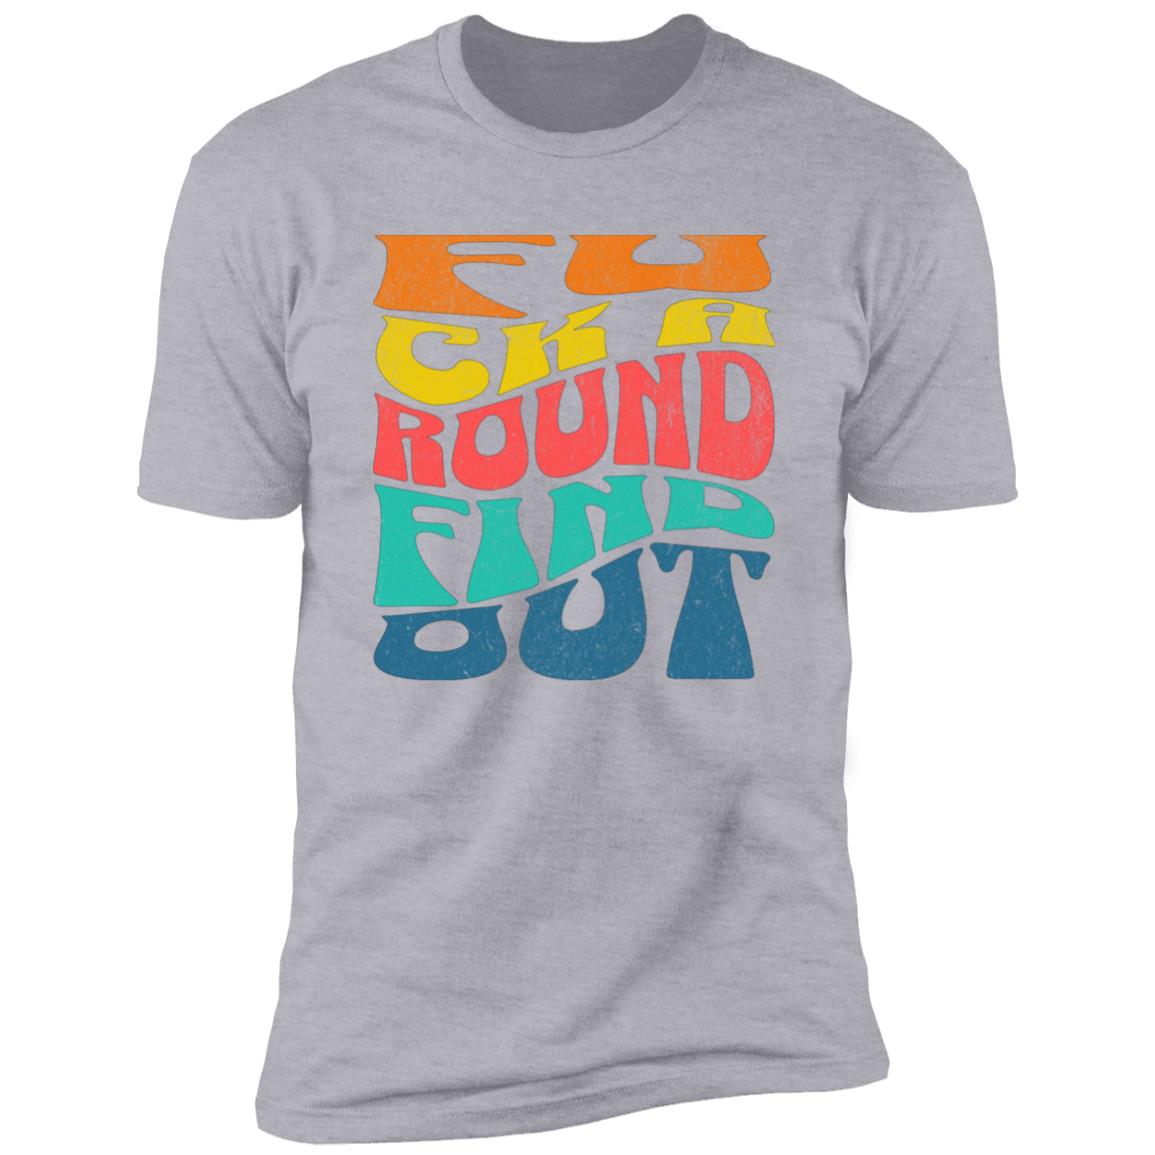 FAFO Groovey Premium Short Sleeve T-Shirt - Expressive DeZien 